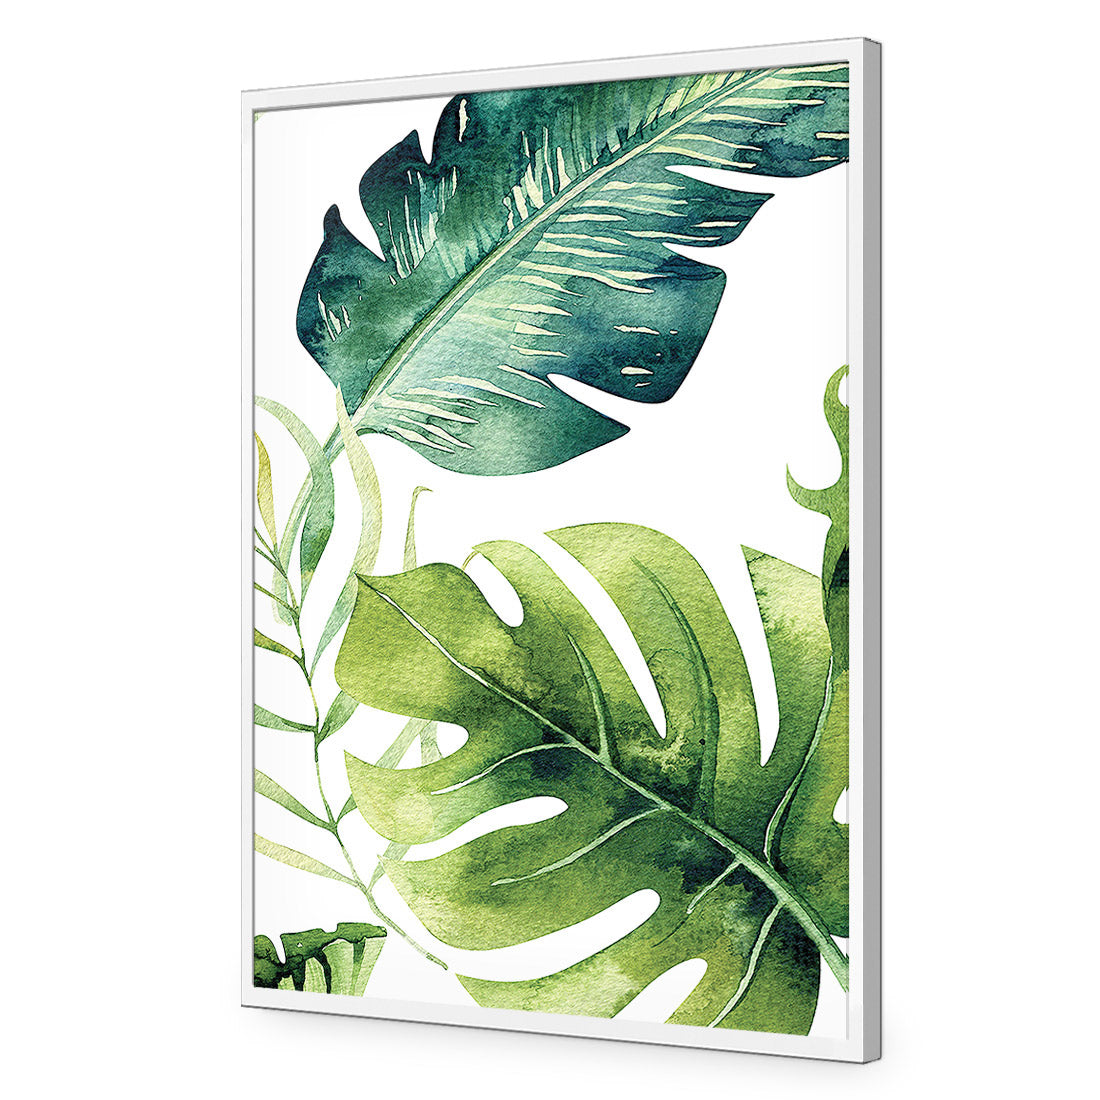 Fascinating Foliage Version 02 Acrylic Glass Art-Acrylic-Wall Art Design-With Border-Acrylic - No Frame-45x30cm-Wall Art Designs